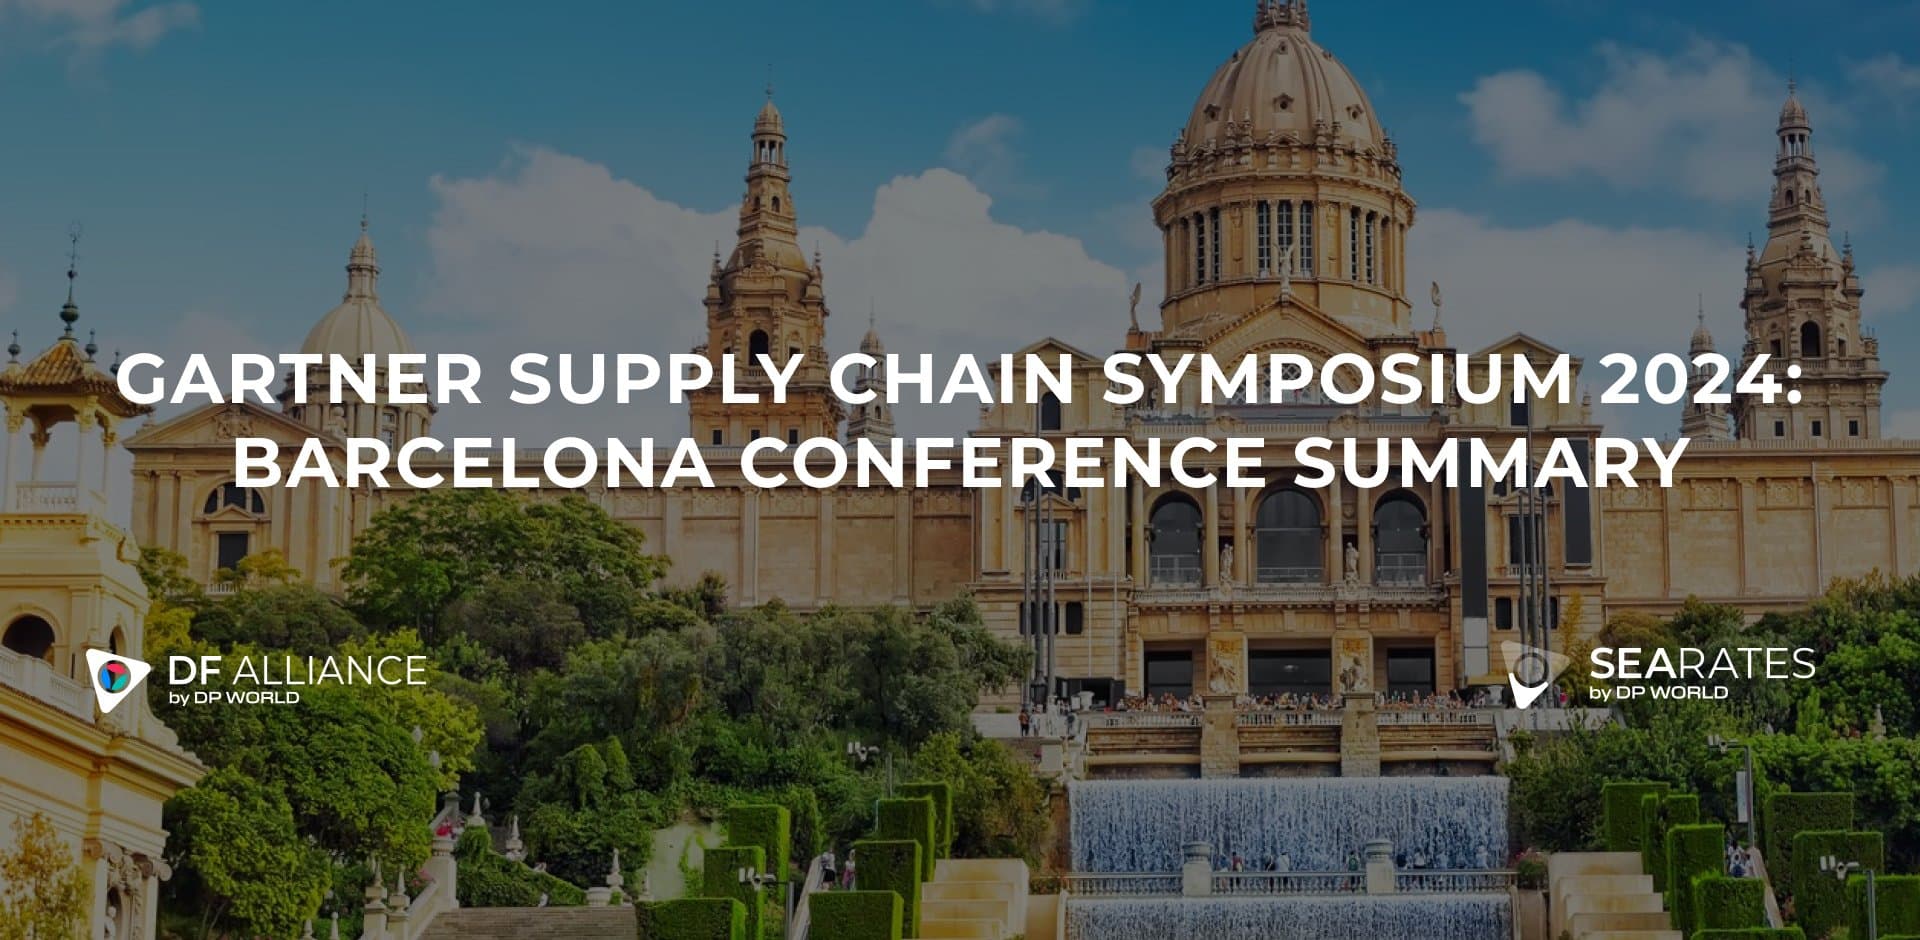 Gartner Supply Chain Symposium Summary: Barcelona Conference 2024